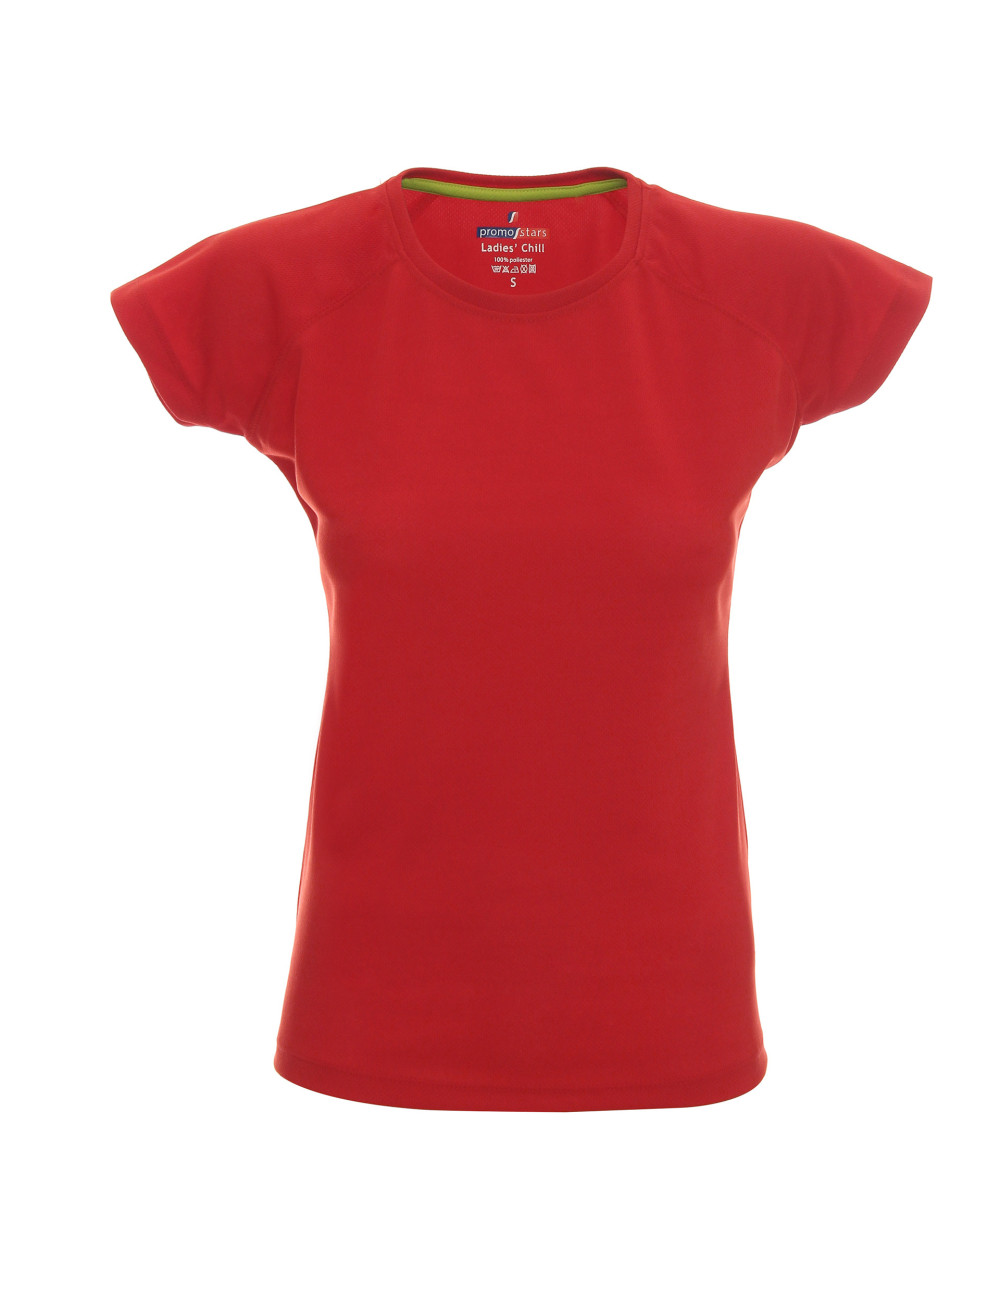 Ladies' chill koszulka damska czerwony Promostars